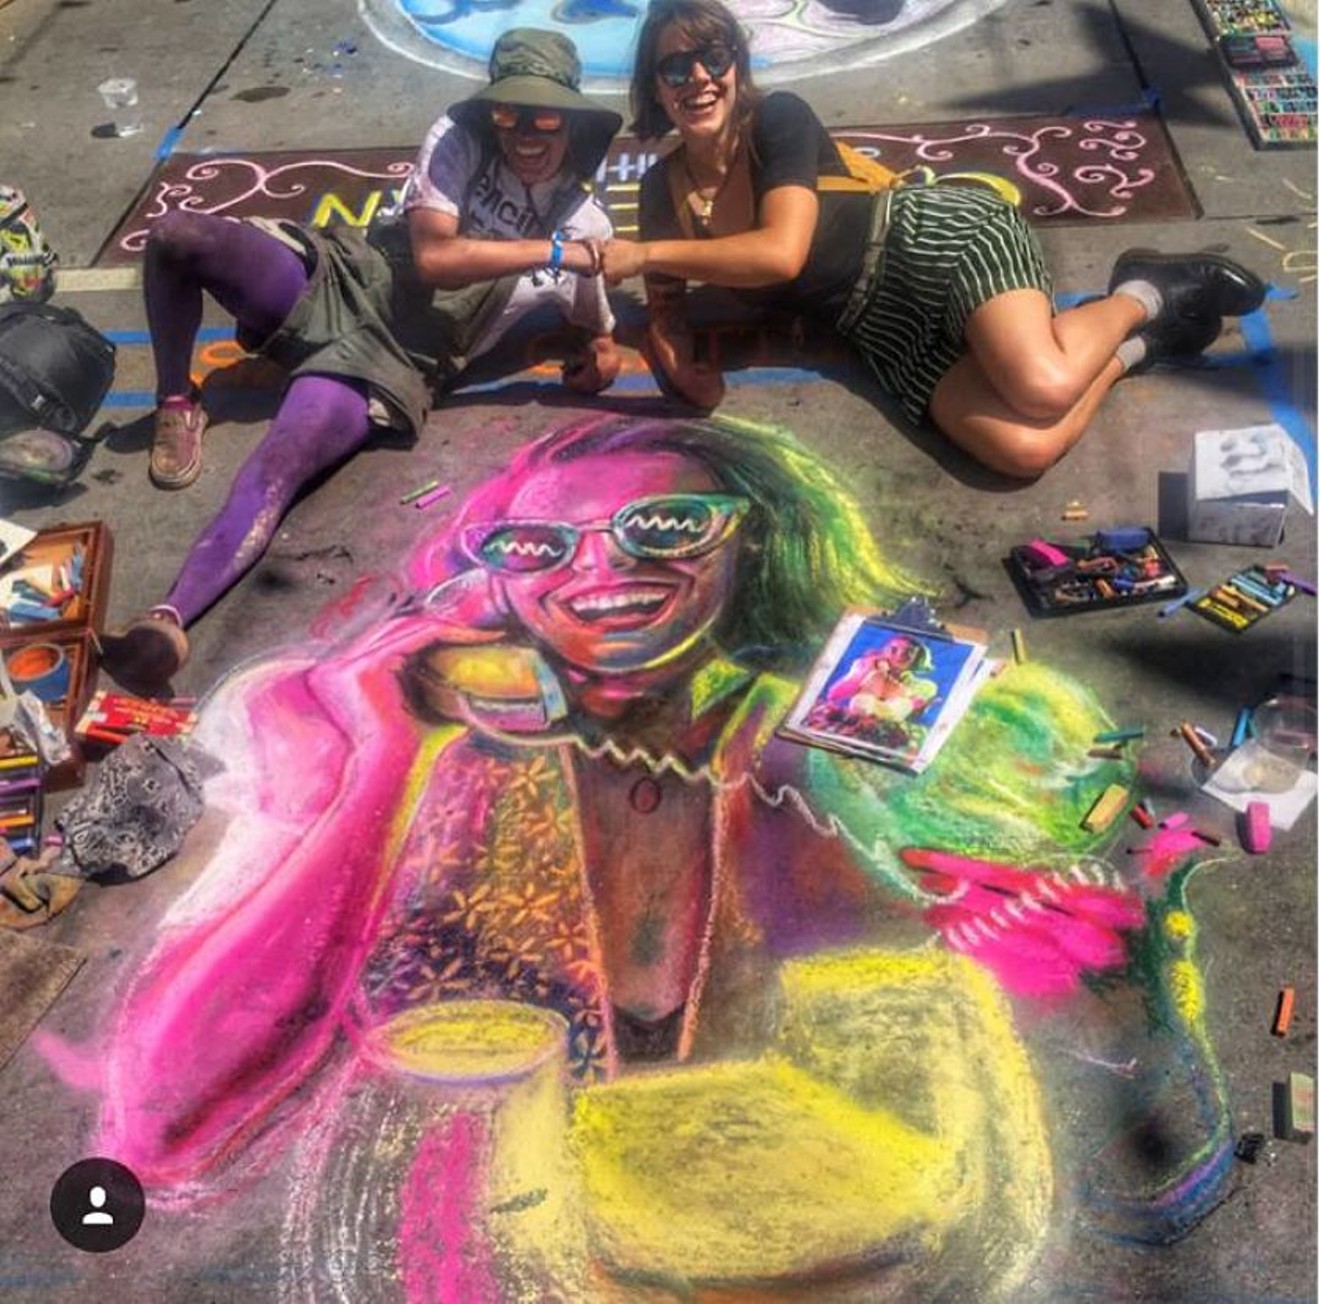 Sally Centrigrade made its mark at Larimer Square's recent Chalk Art Festival.